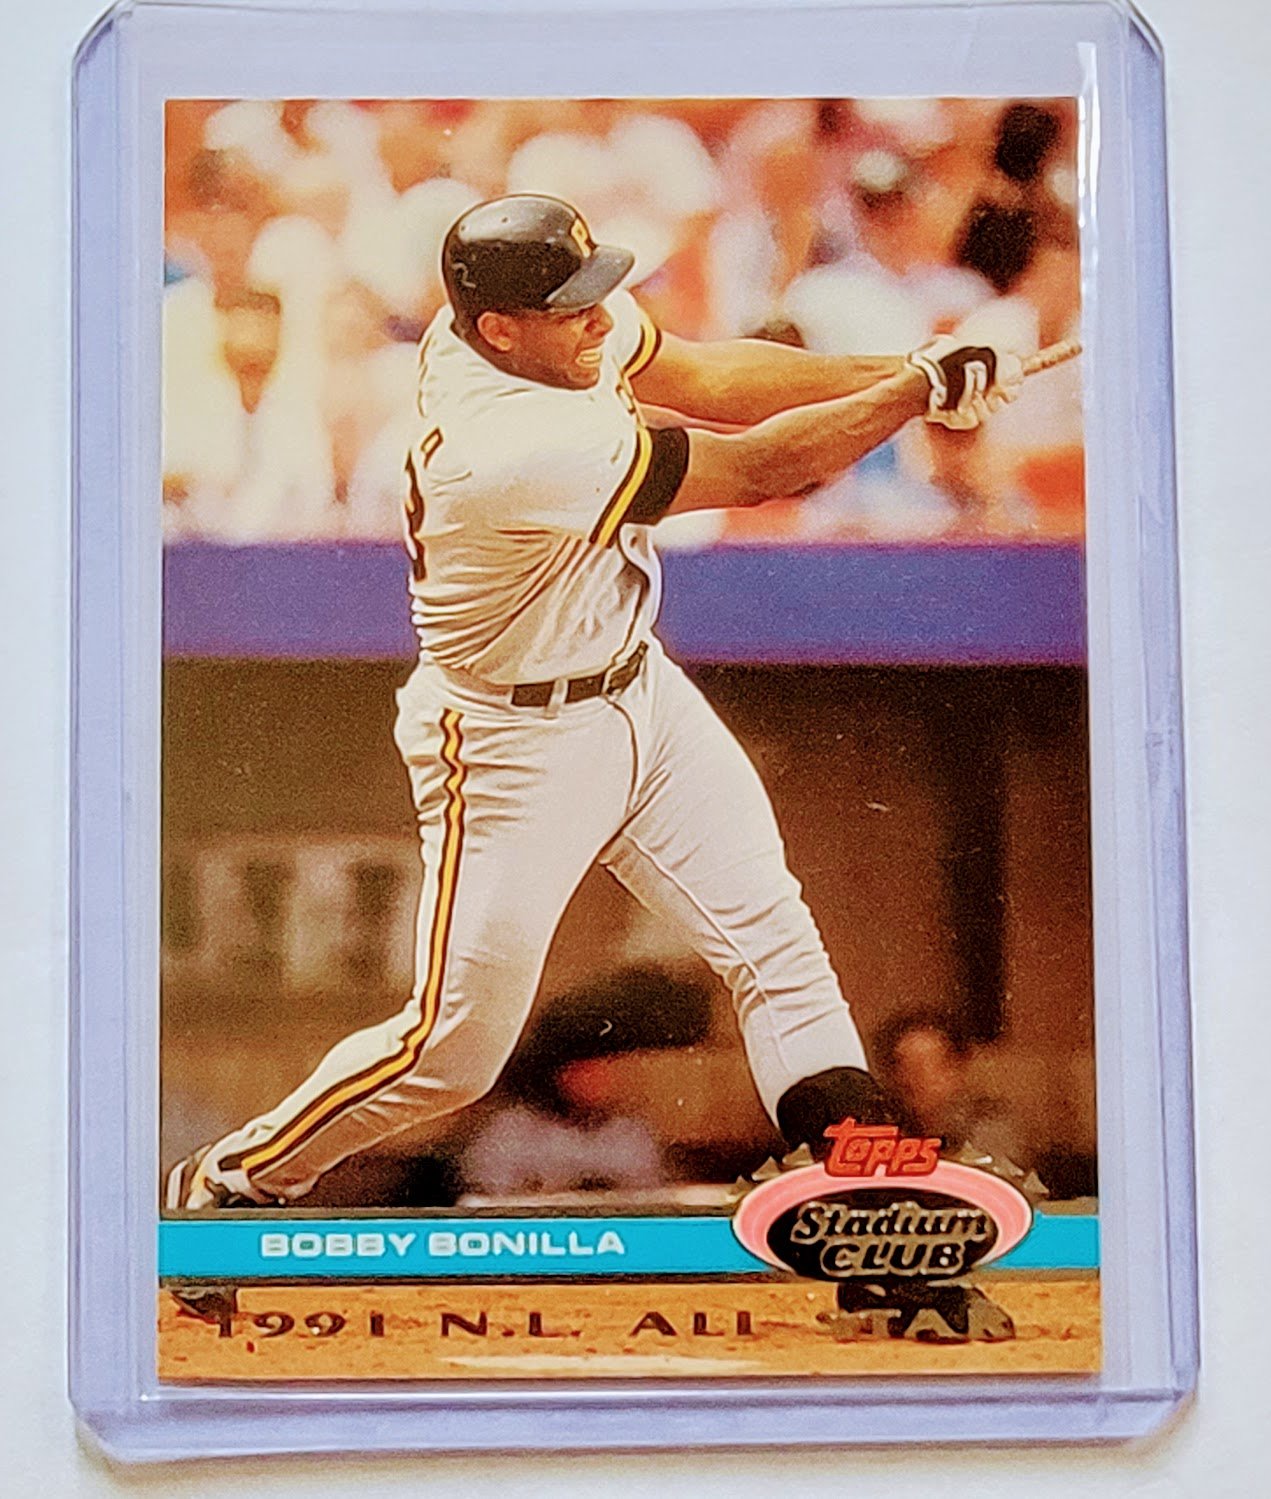 1992 Topps Stadium Club Dome Bobby Bonilla 1991 All Star MLB Baseball Trading Card TPTV simple Xclusive Collectibles   